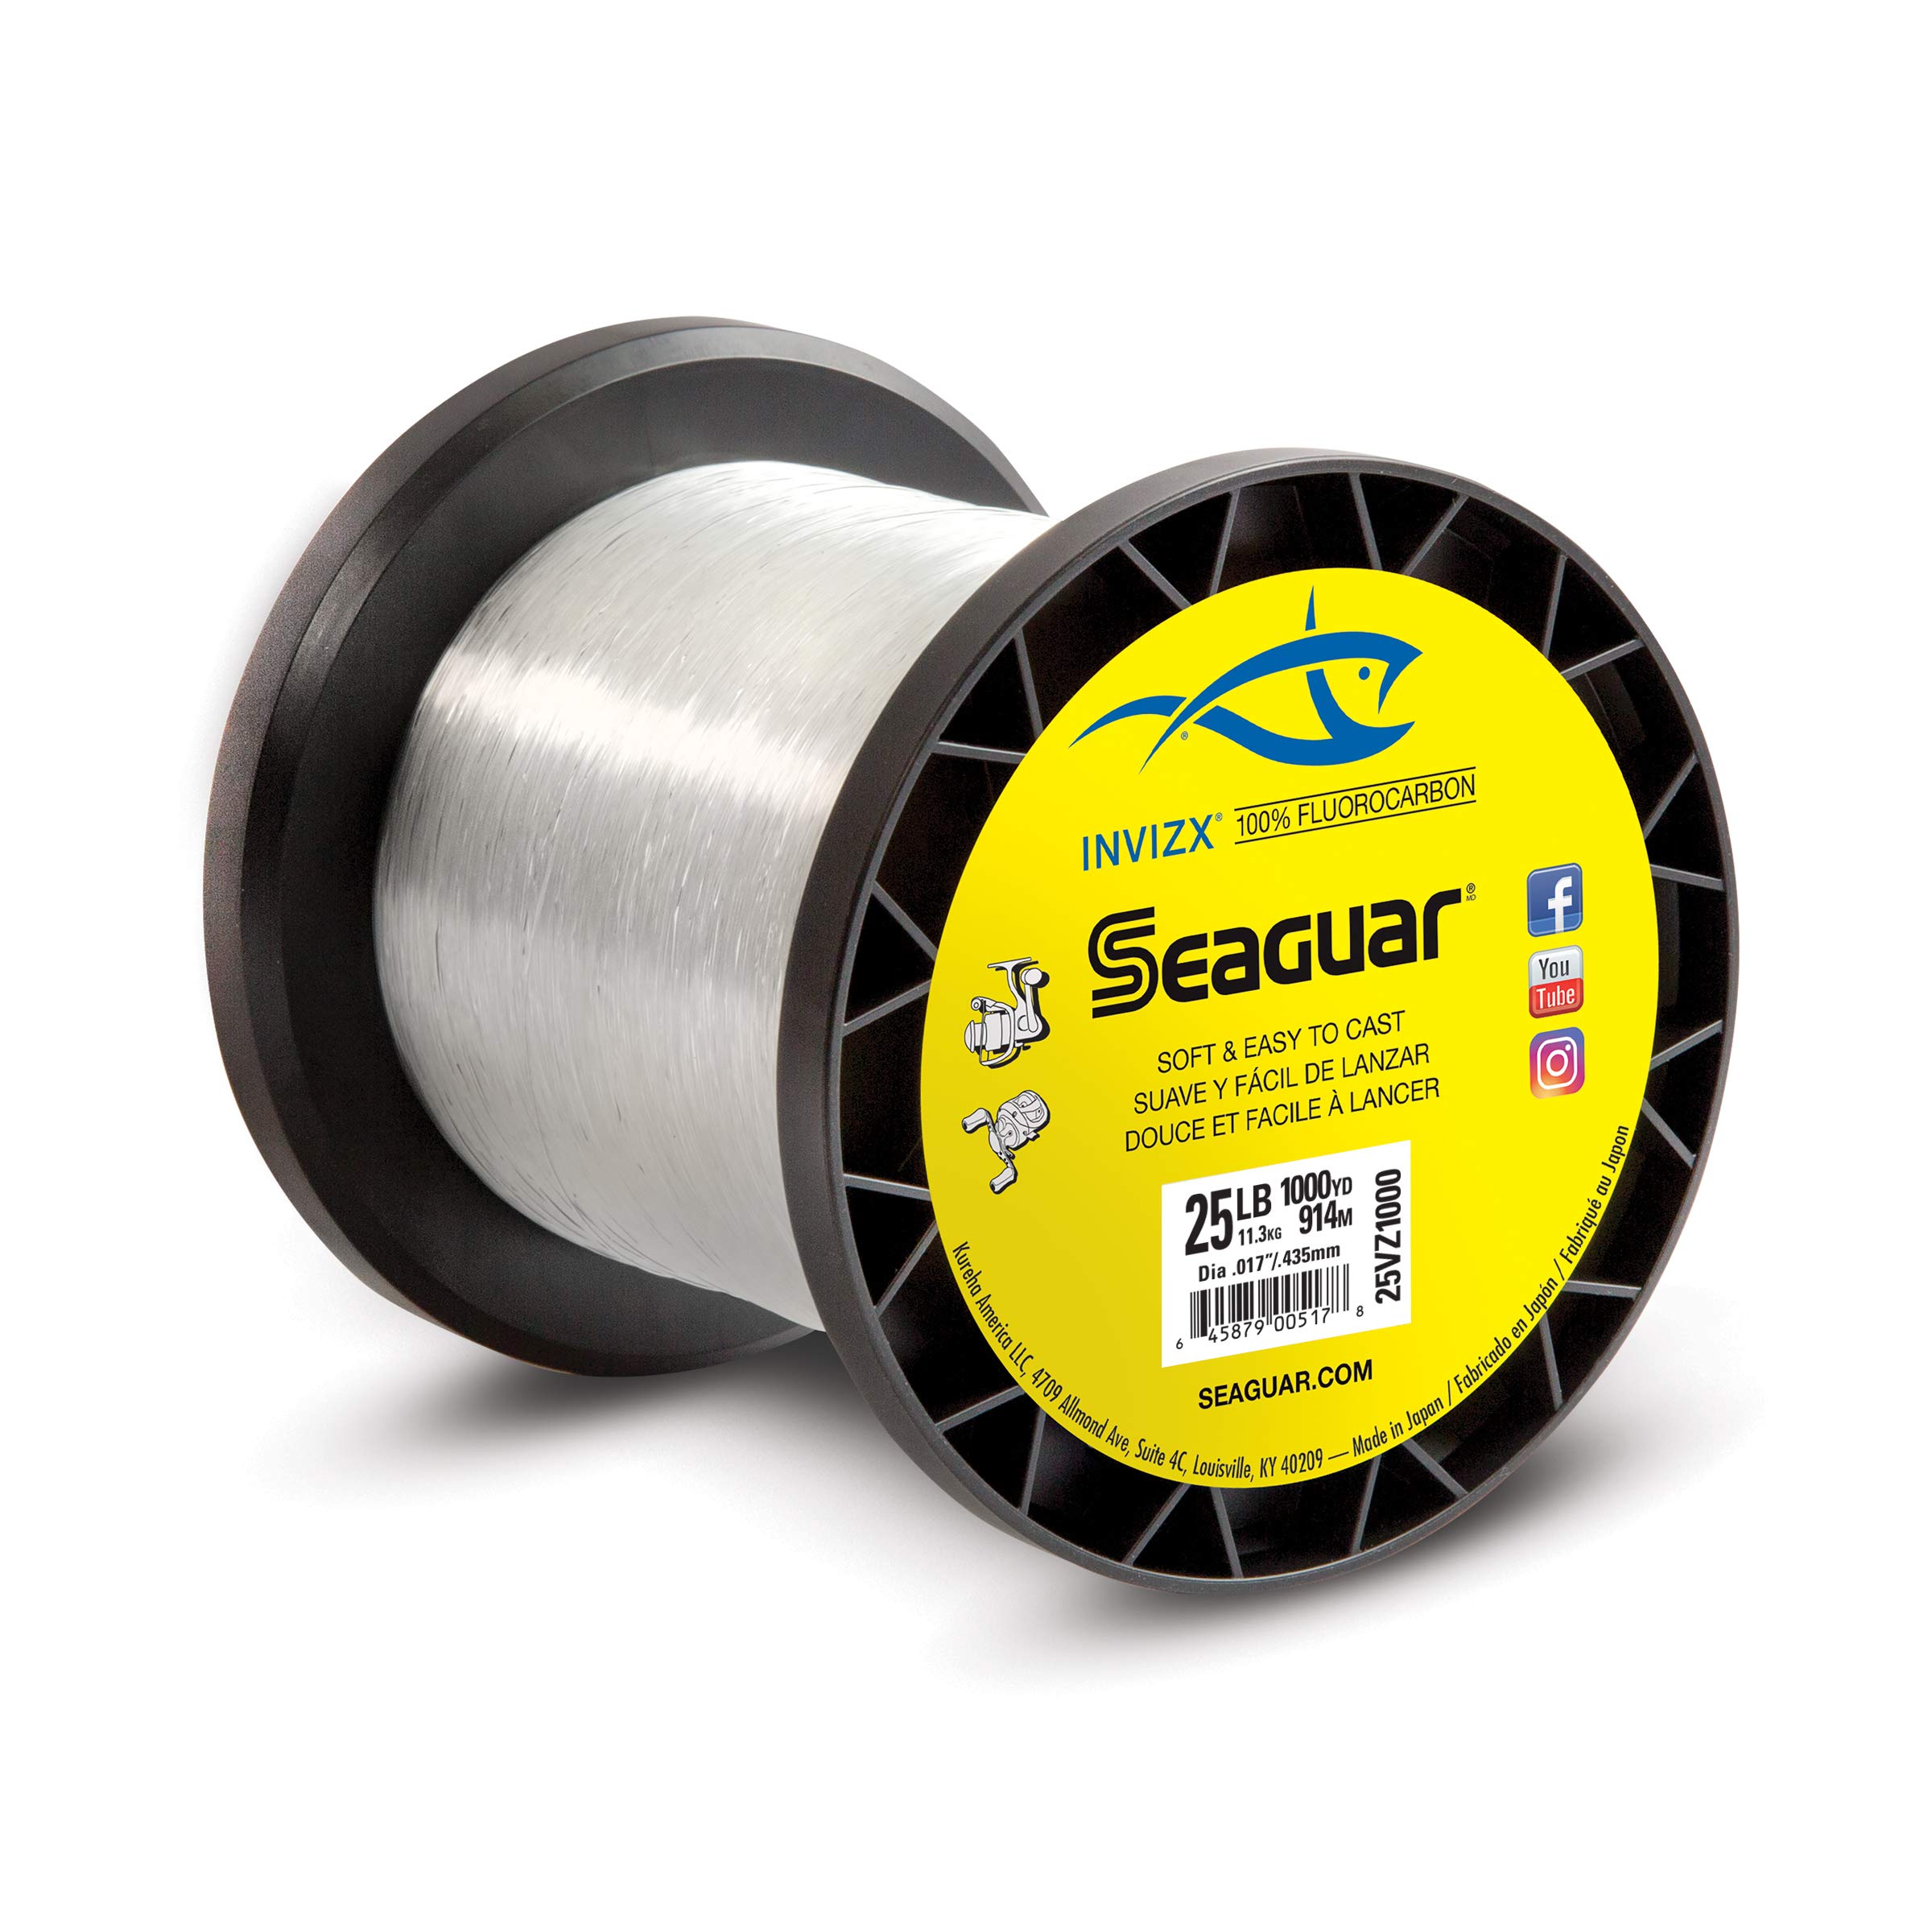 Seaguar Invizx 100% Fluorocarbon 1000 Yard Fishing Line (15-Pound